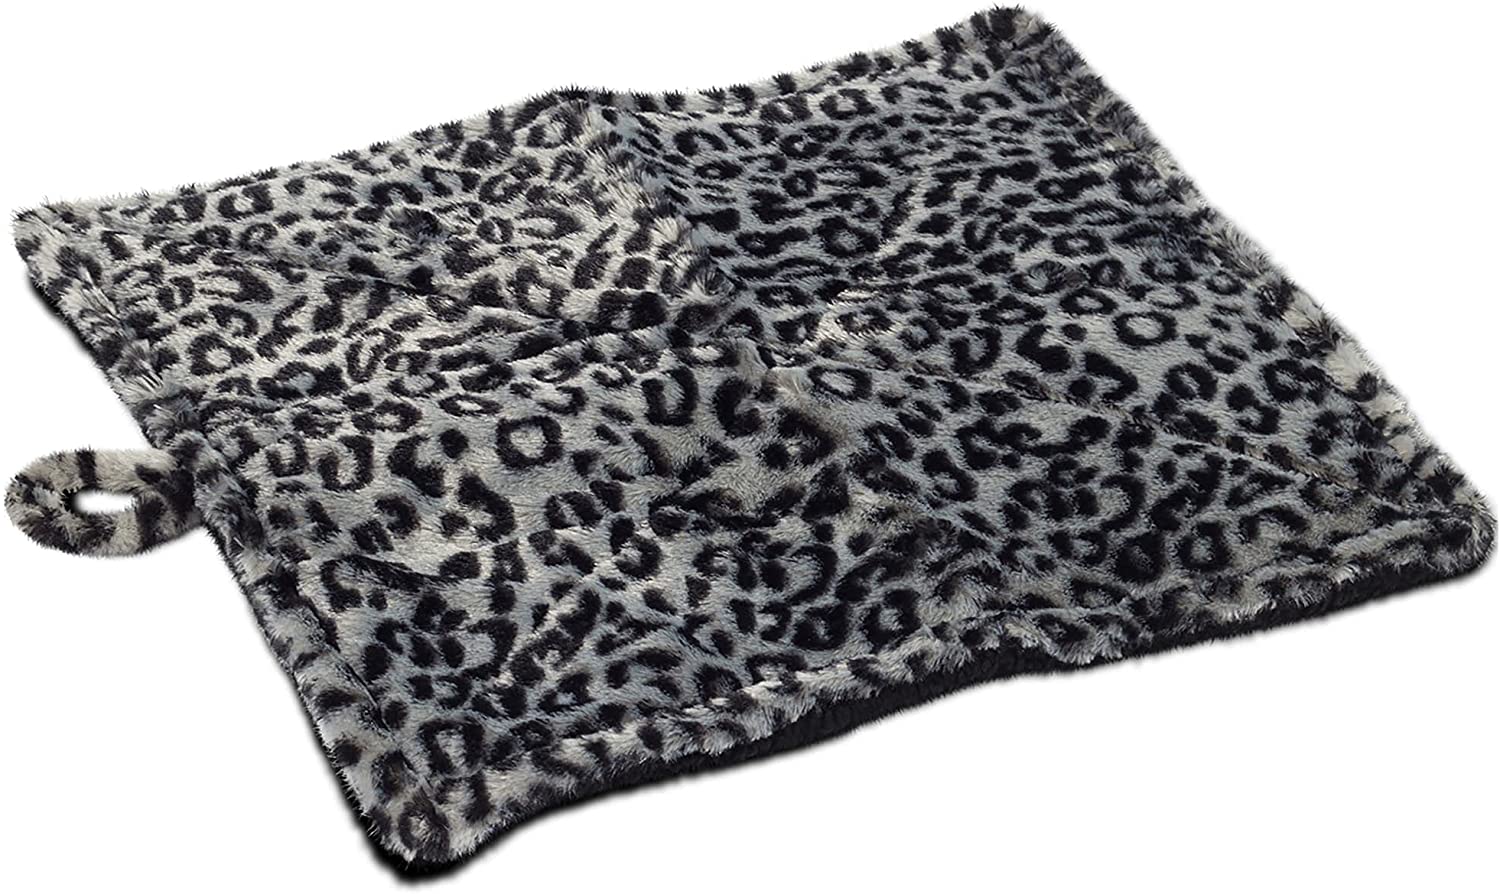 Paws & Pals Self Warming Medium Cat Pet Bed Gray Black Leopard Print (20x17.5x0.1 inches)